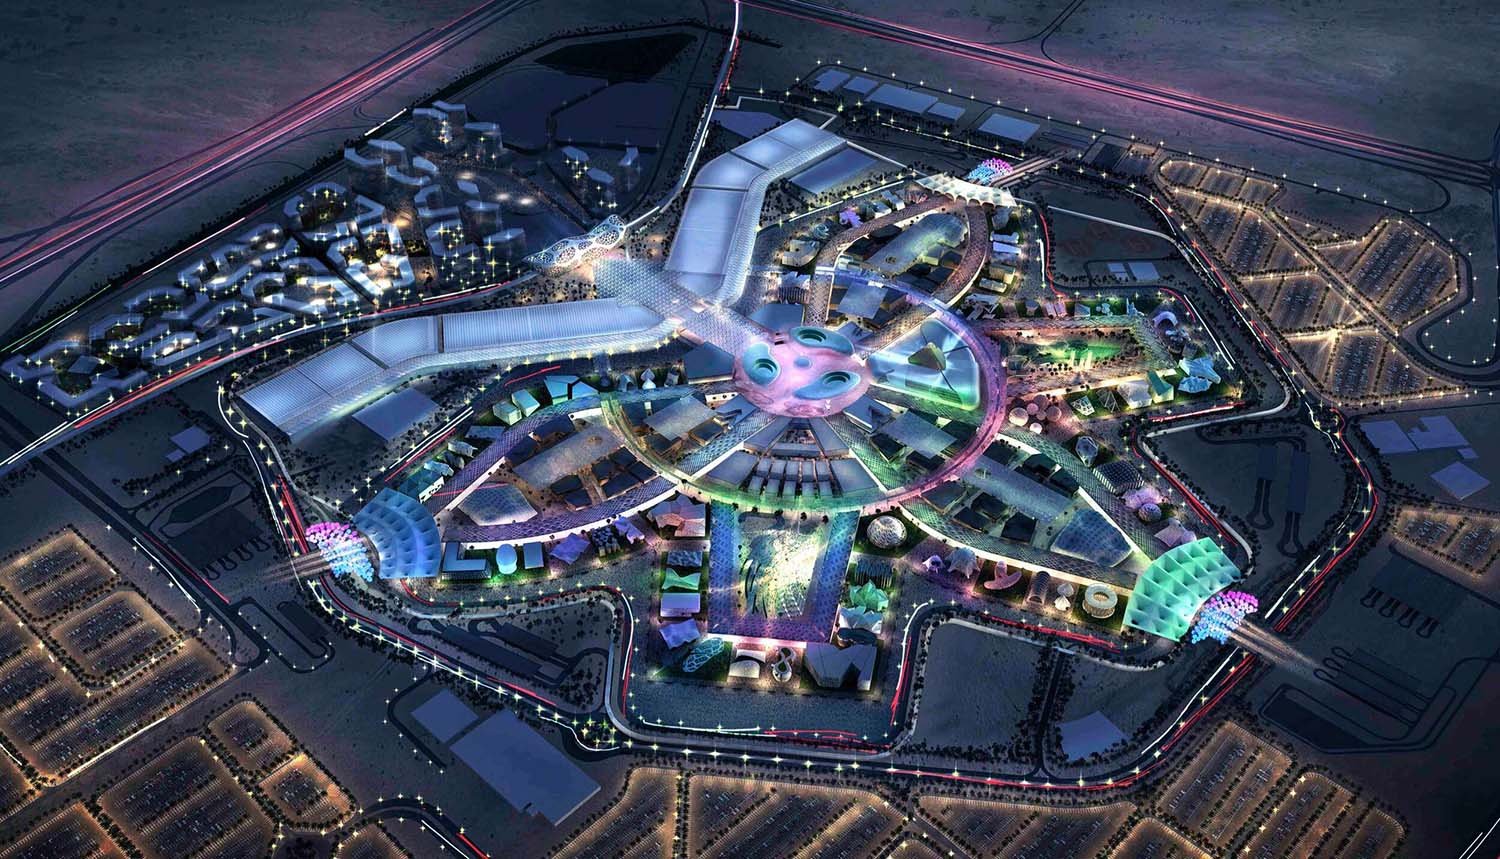 Aerial photograph showcasing the vibrant Expo 2020 site in Dubai